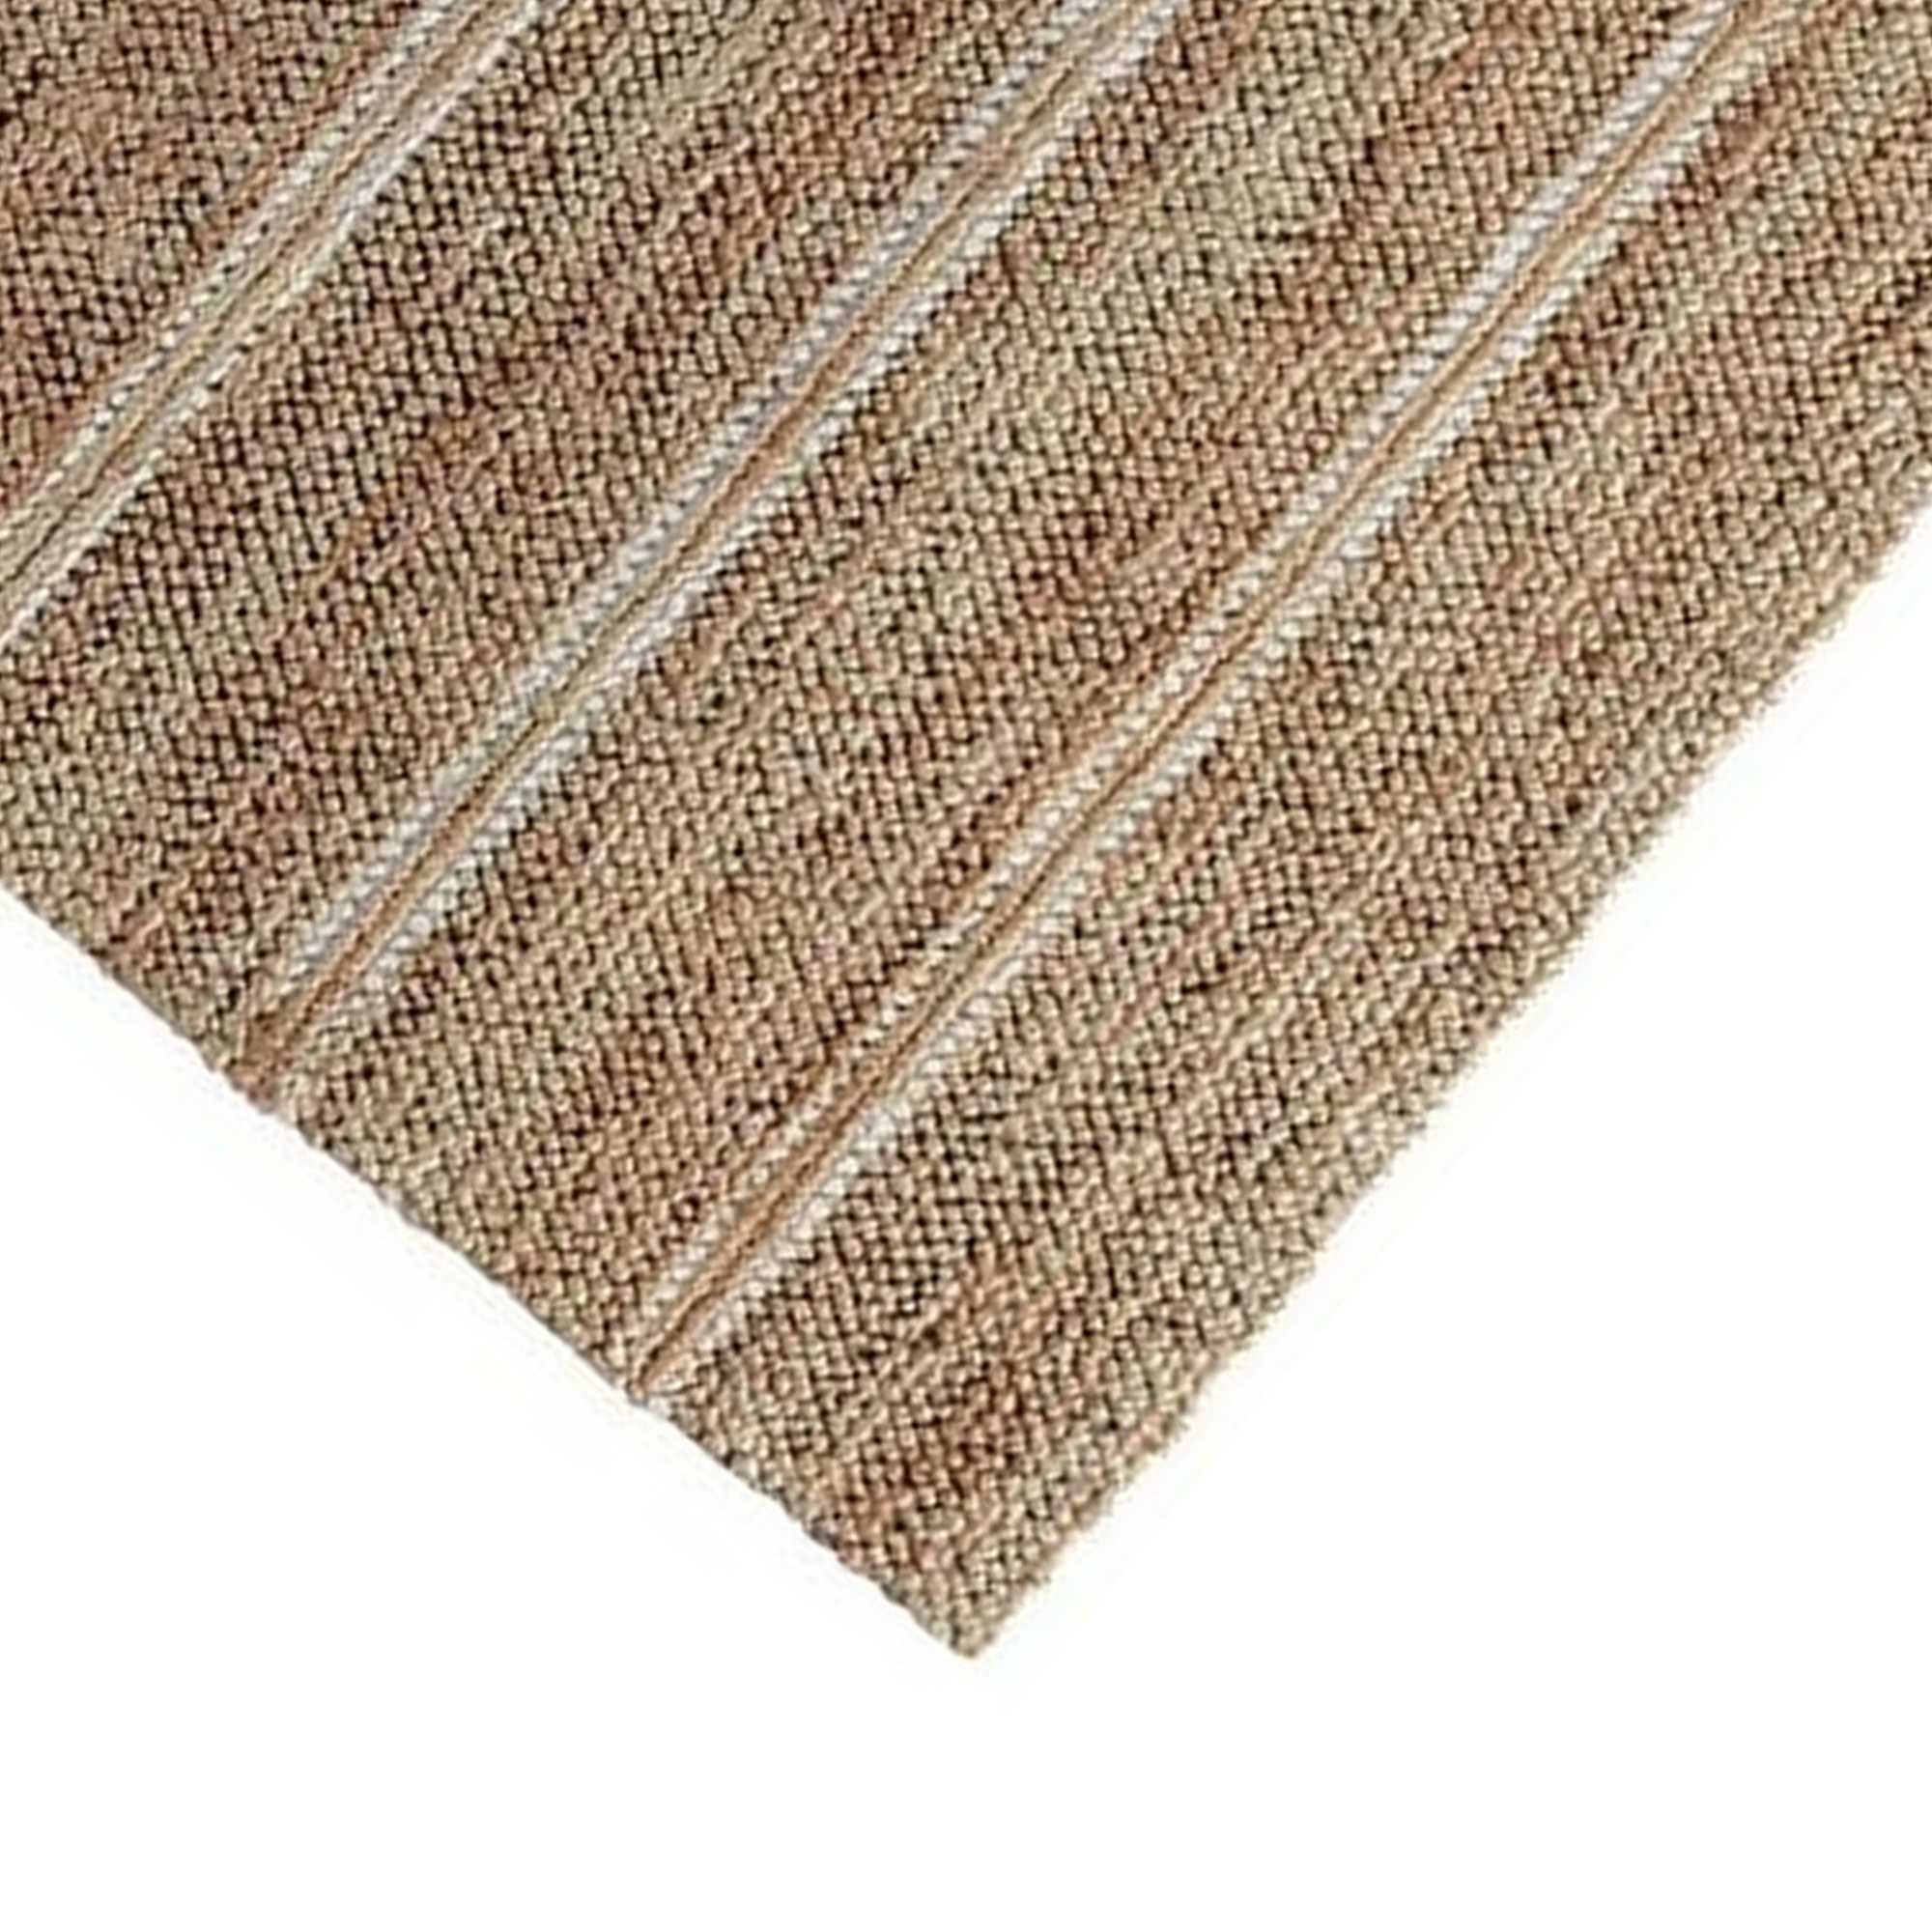 Ryan 8 X 10 Area Rug, Handwoven Stripes, Brown Cotton And Jute Fabric - Saltoro Sherpi